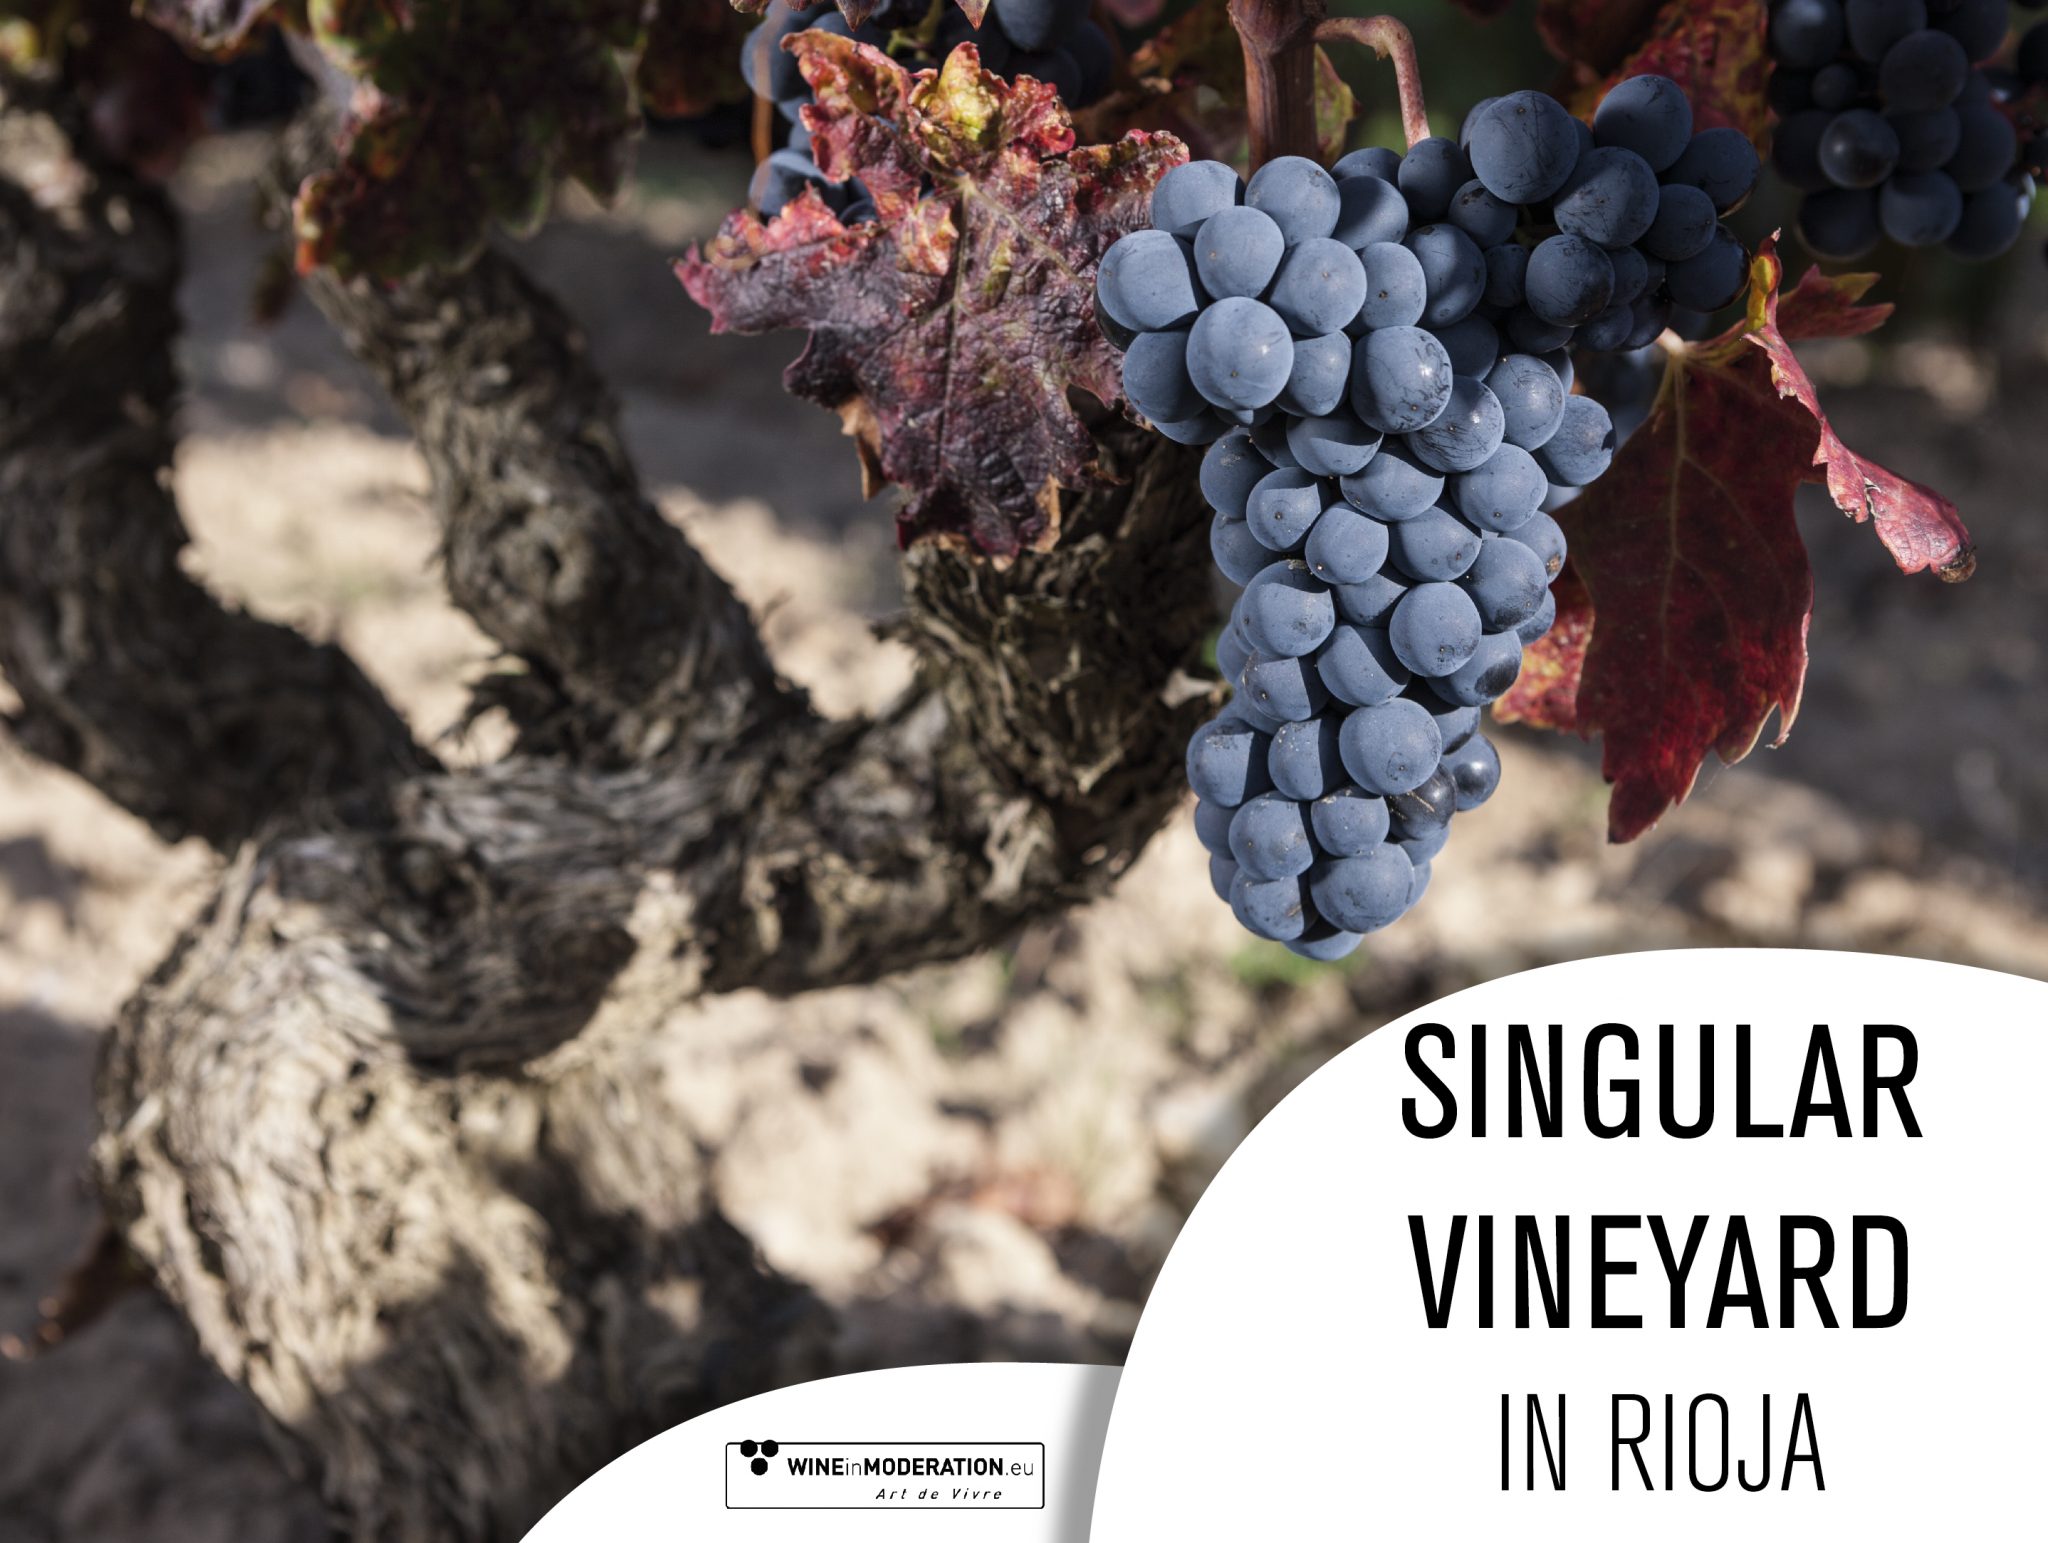 Bodegas Valdelacierva is “Singular vineyard”.